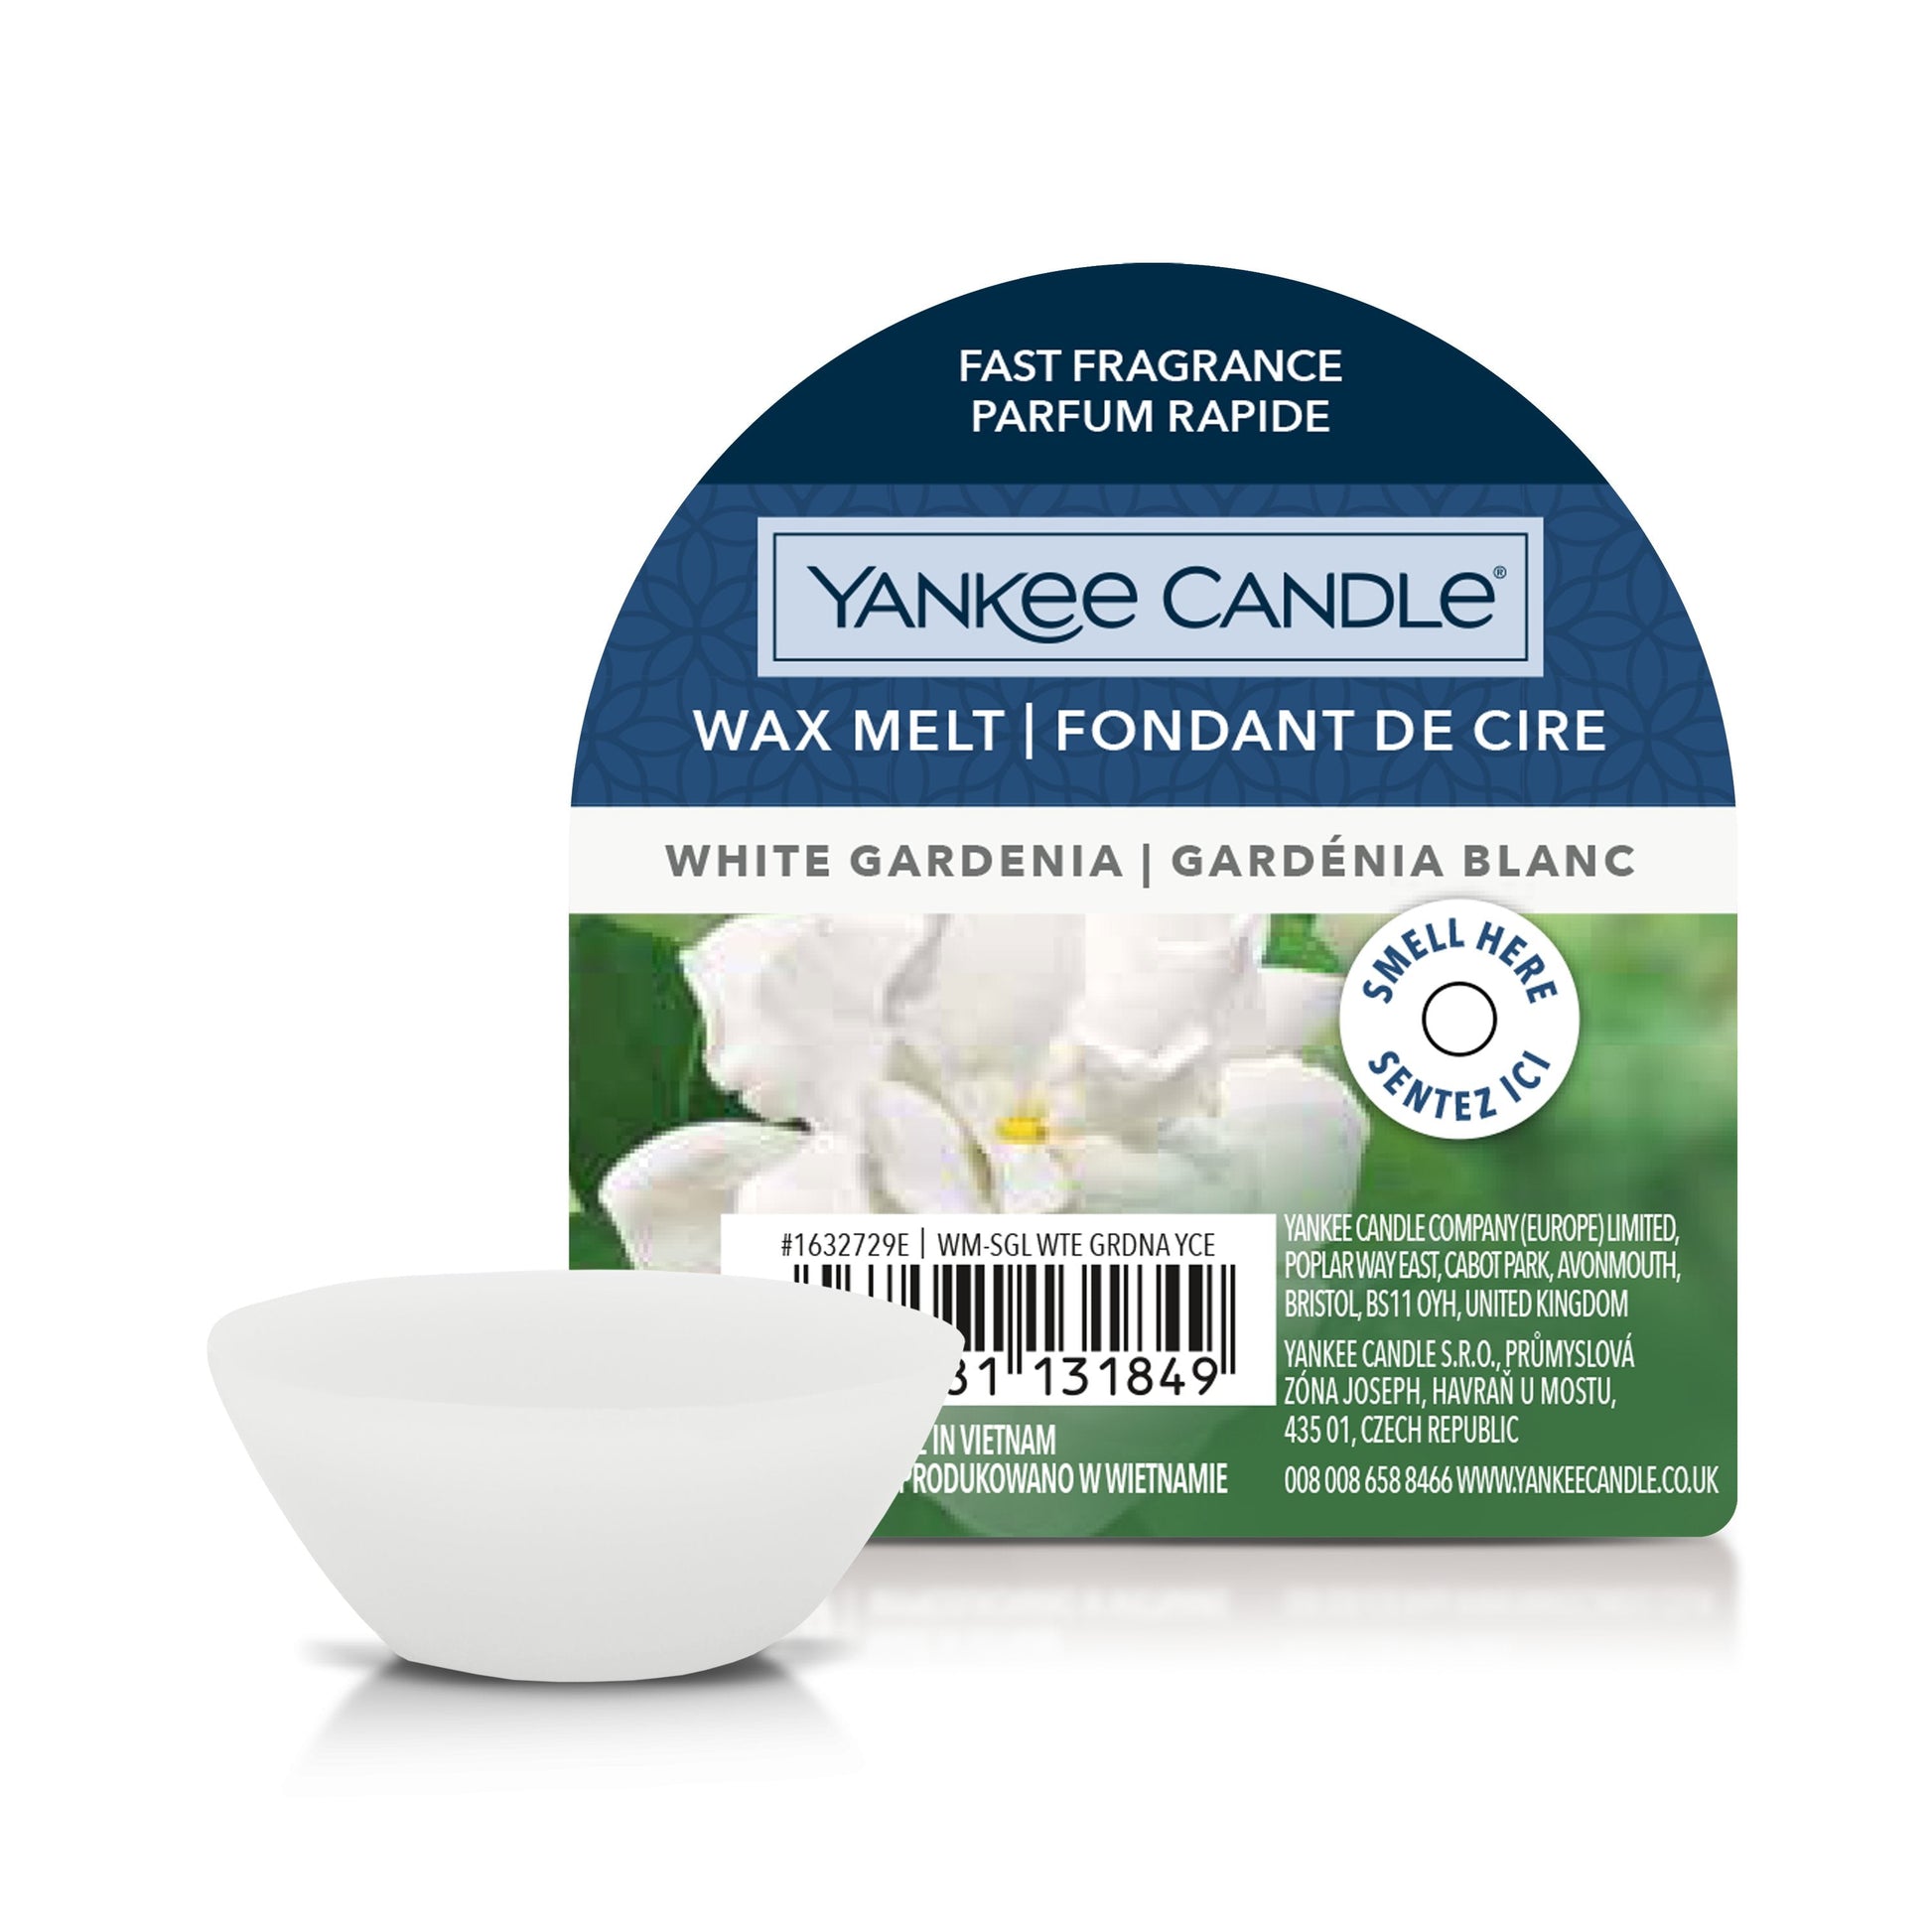 Yankee Candle White Gardenia Wax Melt bestellen